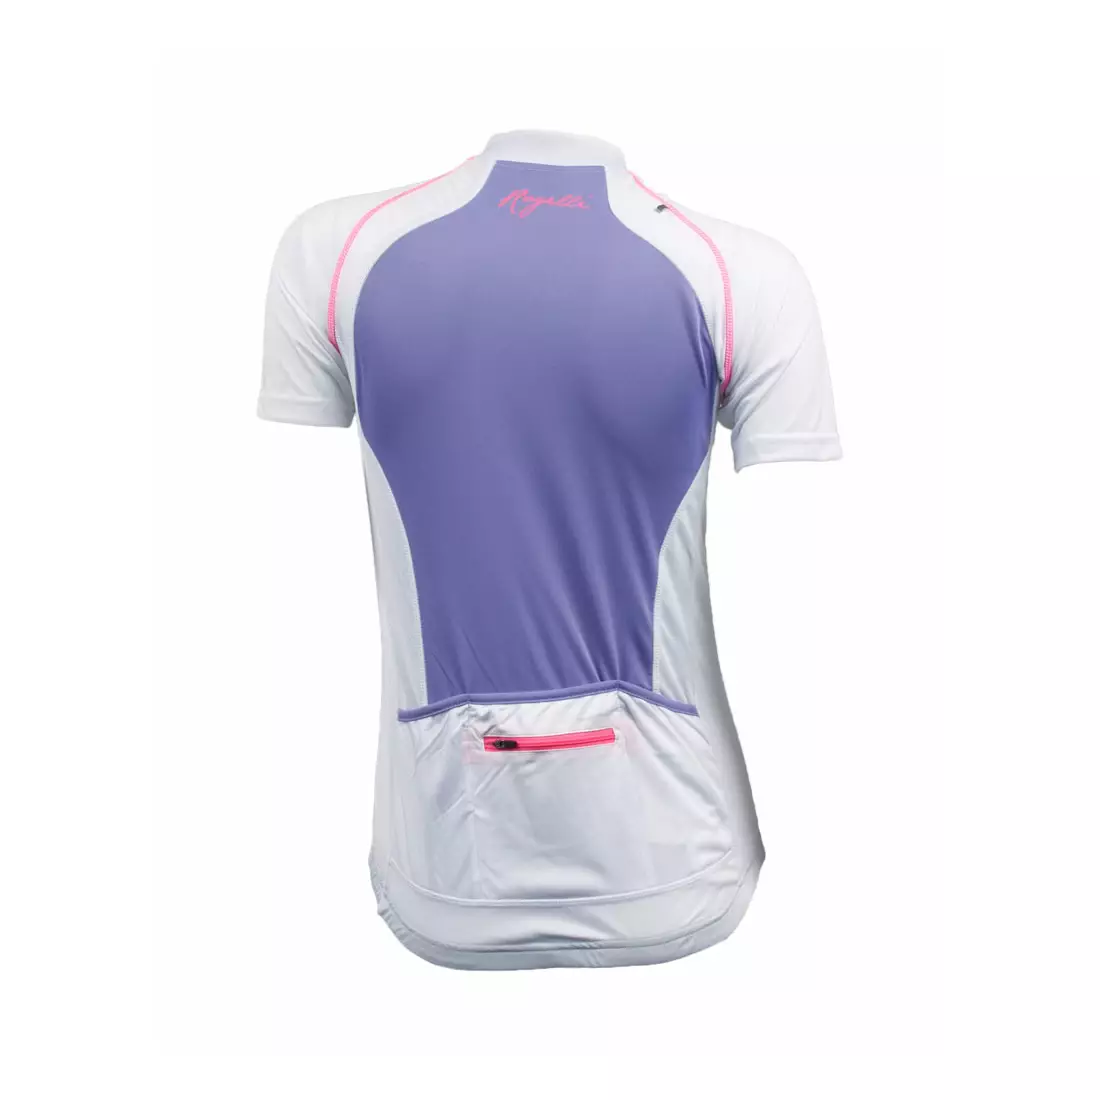 ROGELLI BICE - dámsky cyklistický dres fialovej a bielej farby